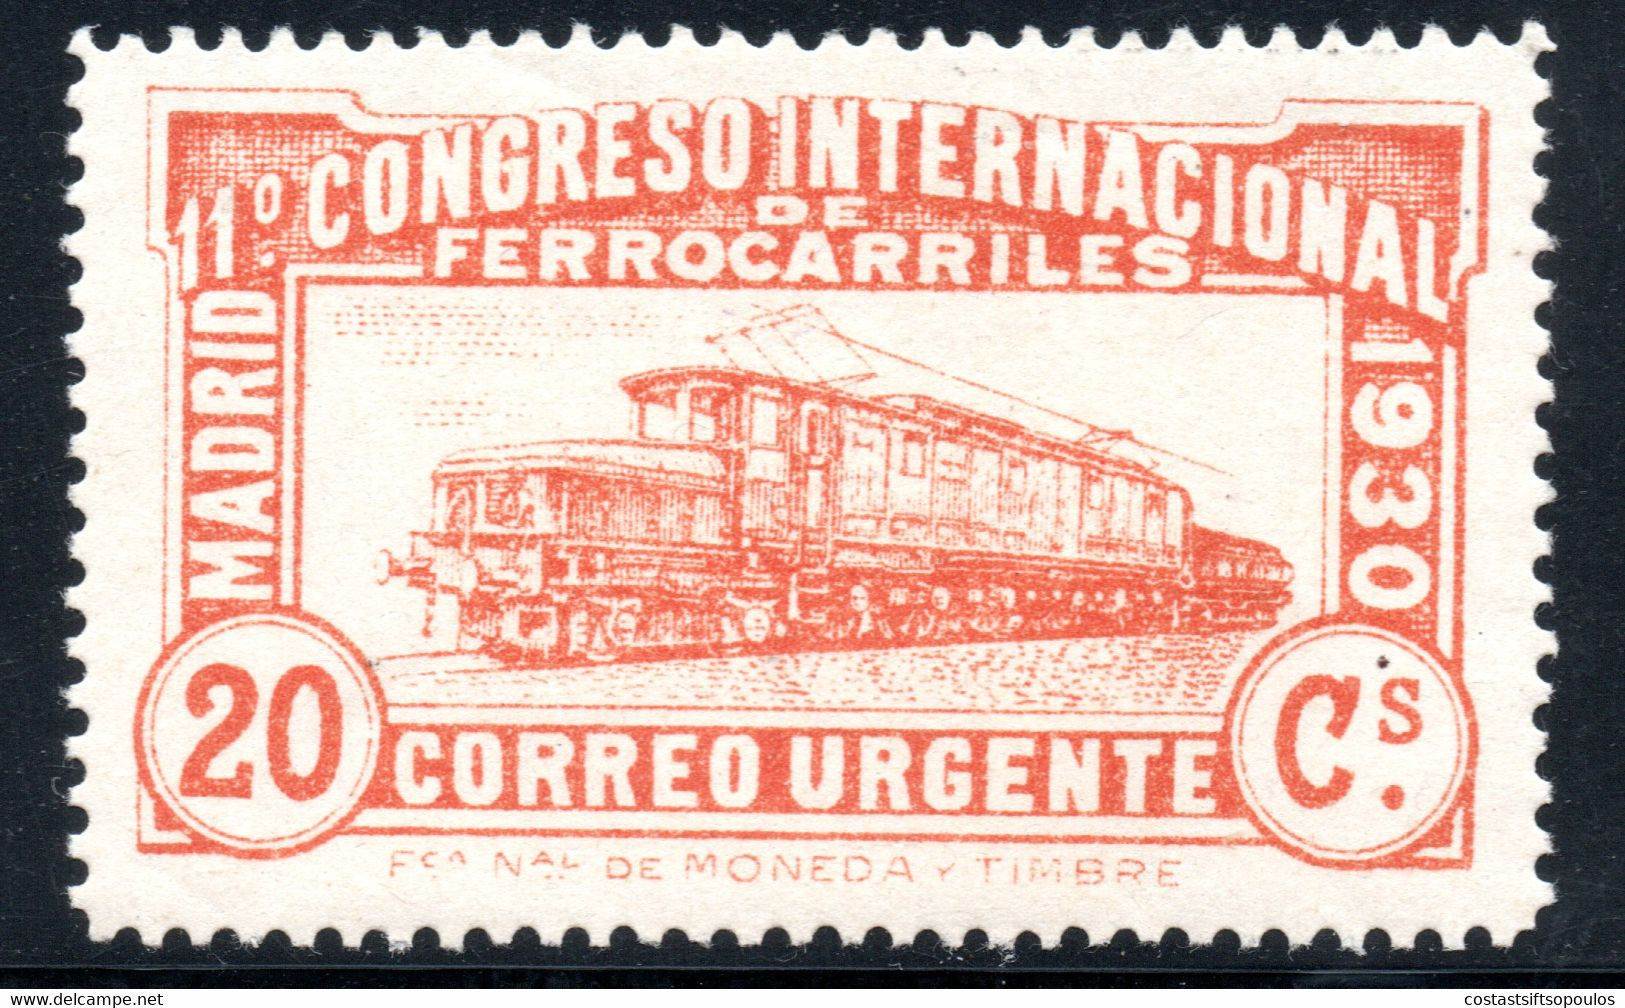 553.SPAIN.1930 RAILWAY CONGRESS.#482,SC.E6,MNH - Correo Urgente